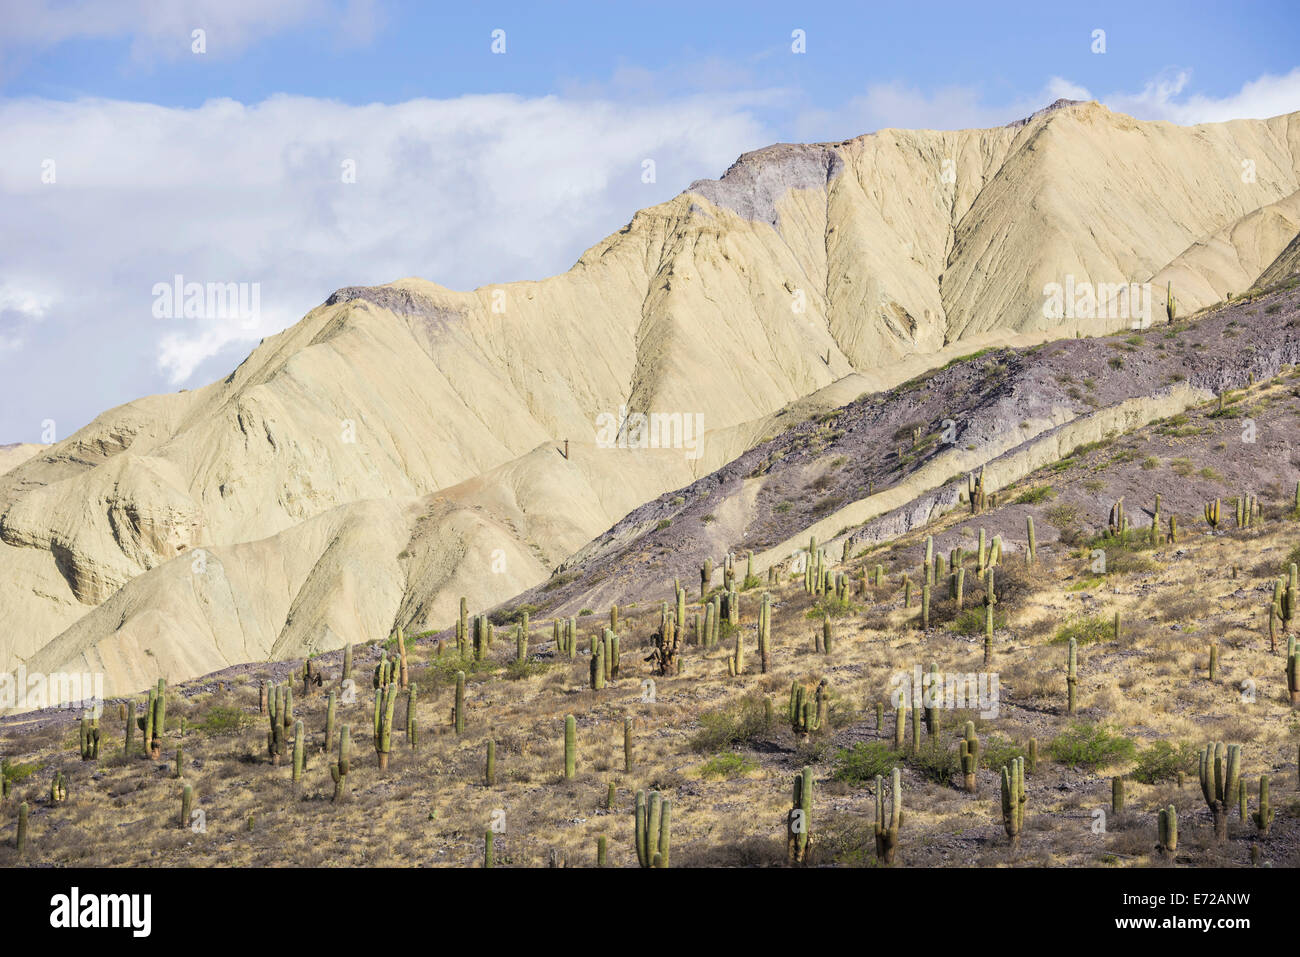 Le montagne con Trichocereus pasacana cactus in primo piano, vicino a Purmamarca, provincia di Jujuy, Argentina Foto Stock